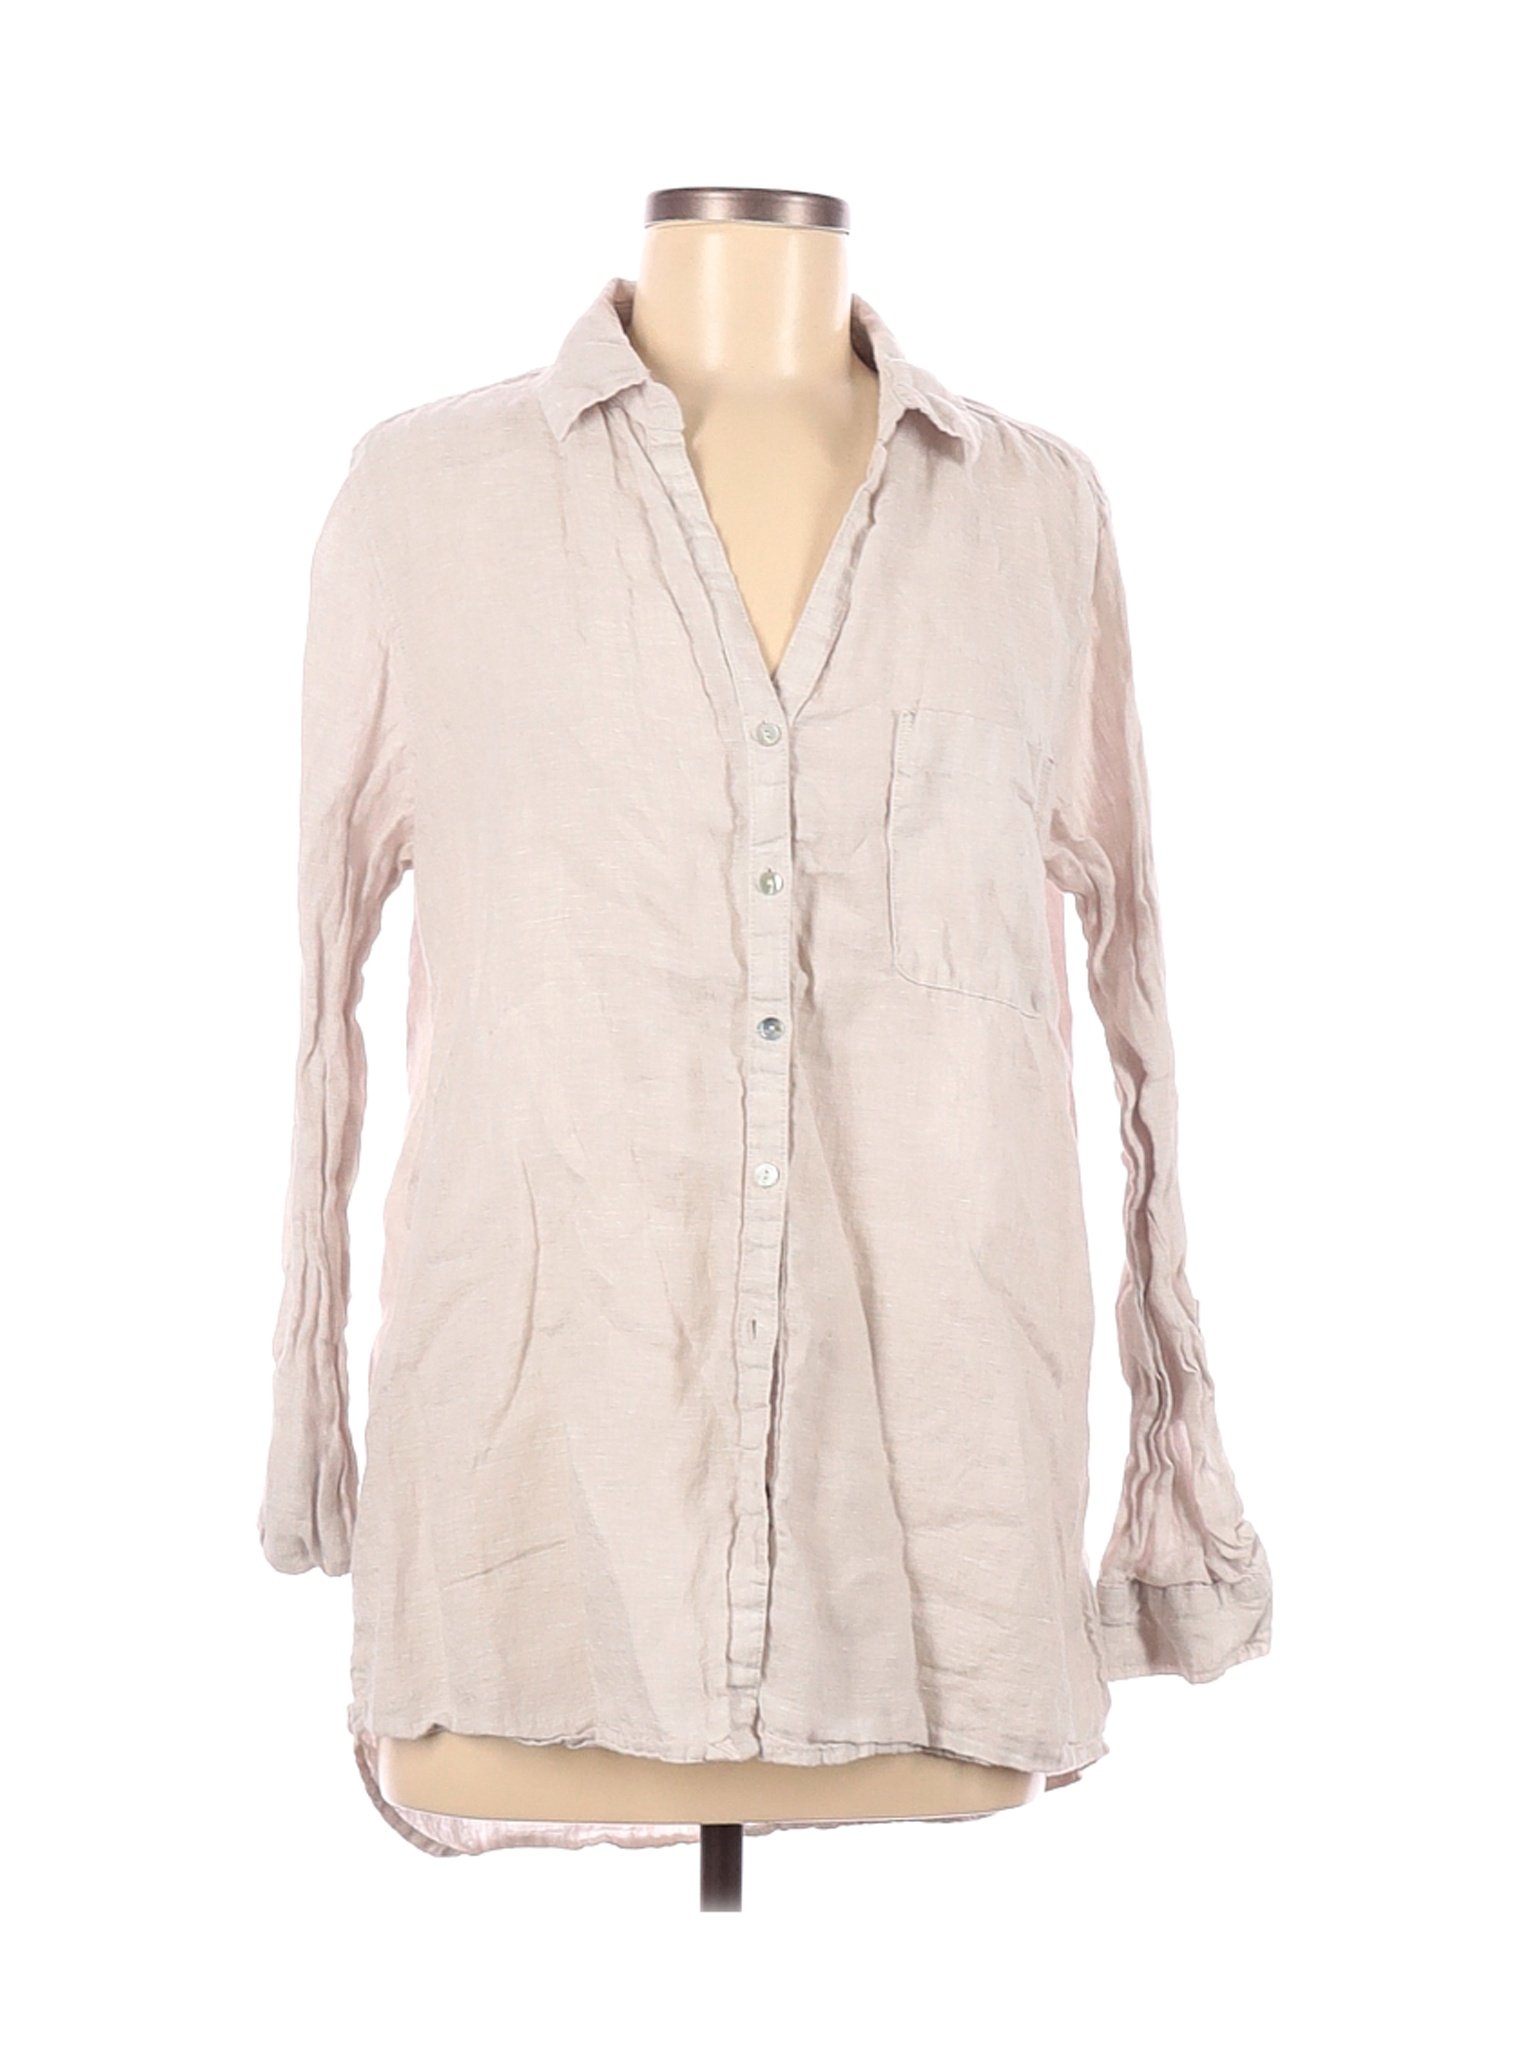 C&C California Women Ivory Long Sleeve Button-Down Shirt M | eBay